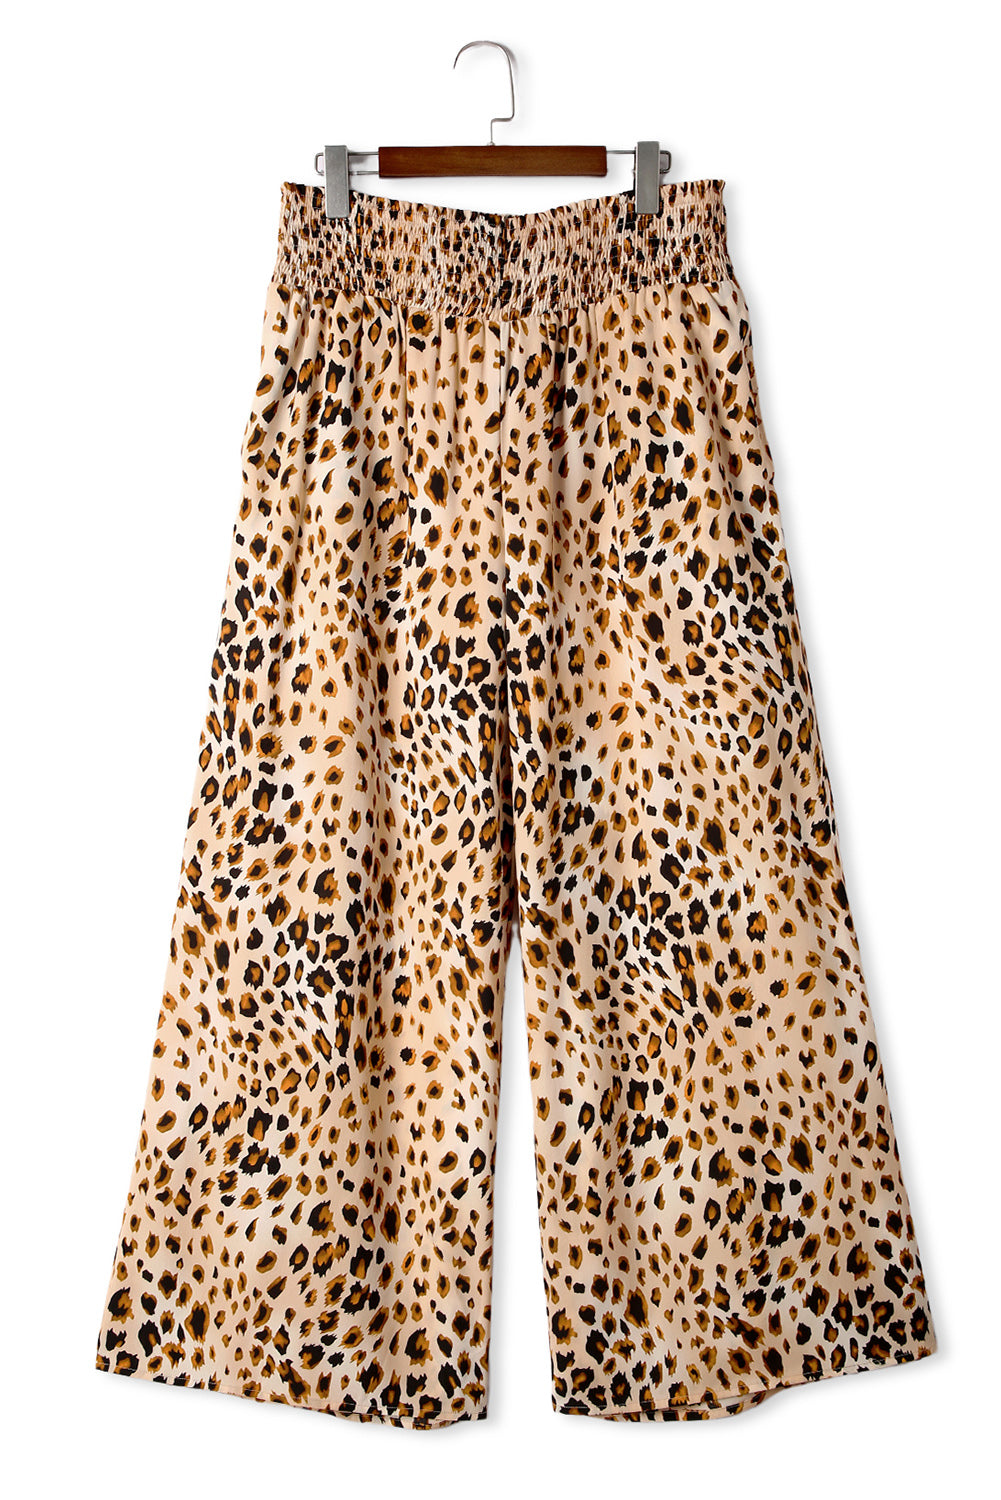 Pantaloni larghi a vita alta fumé leopardati taglie forti